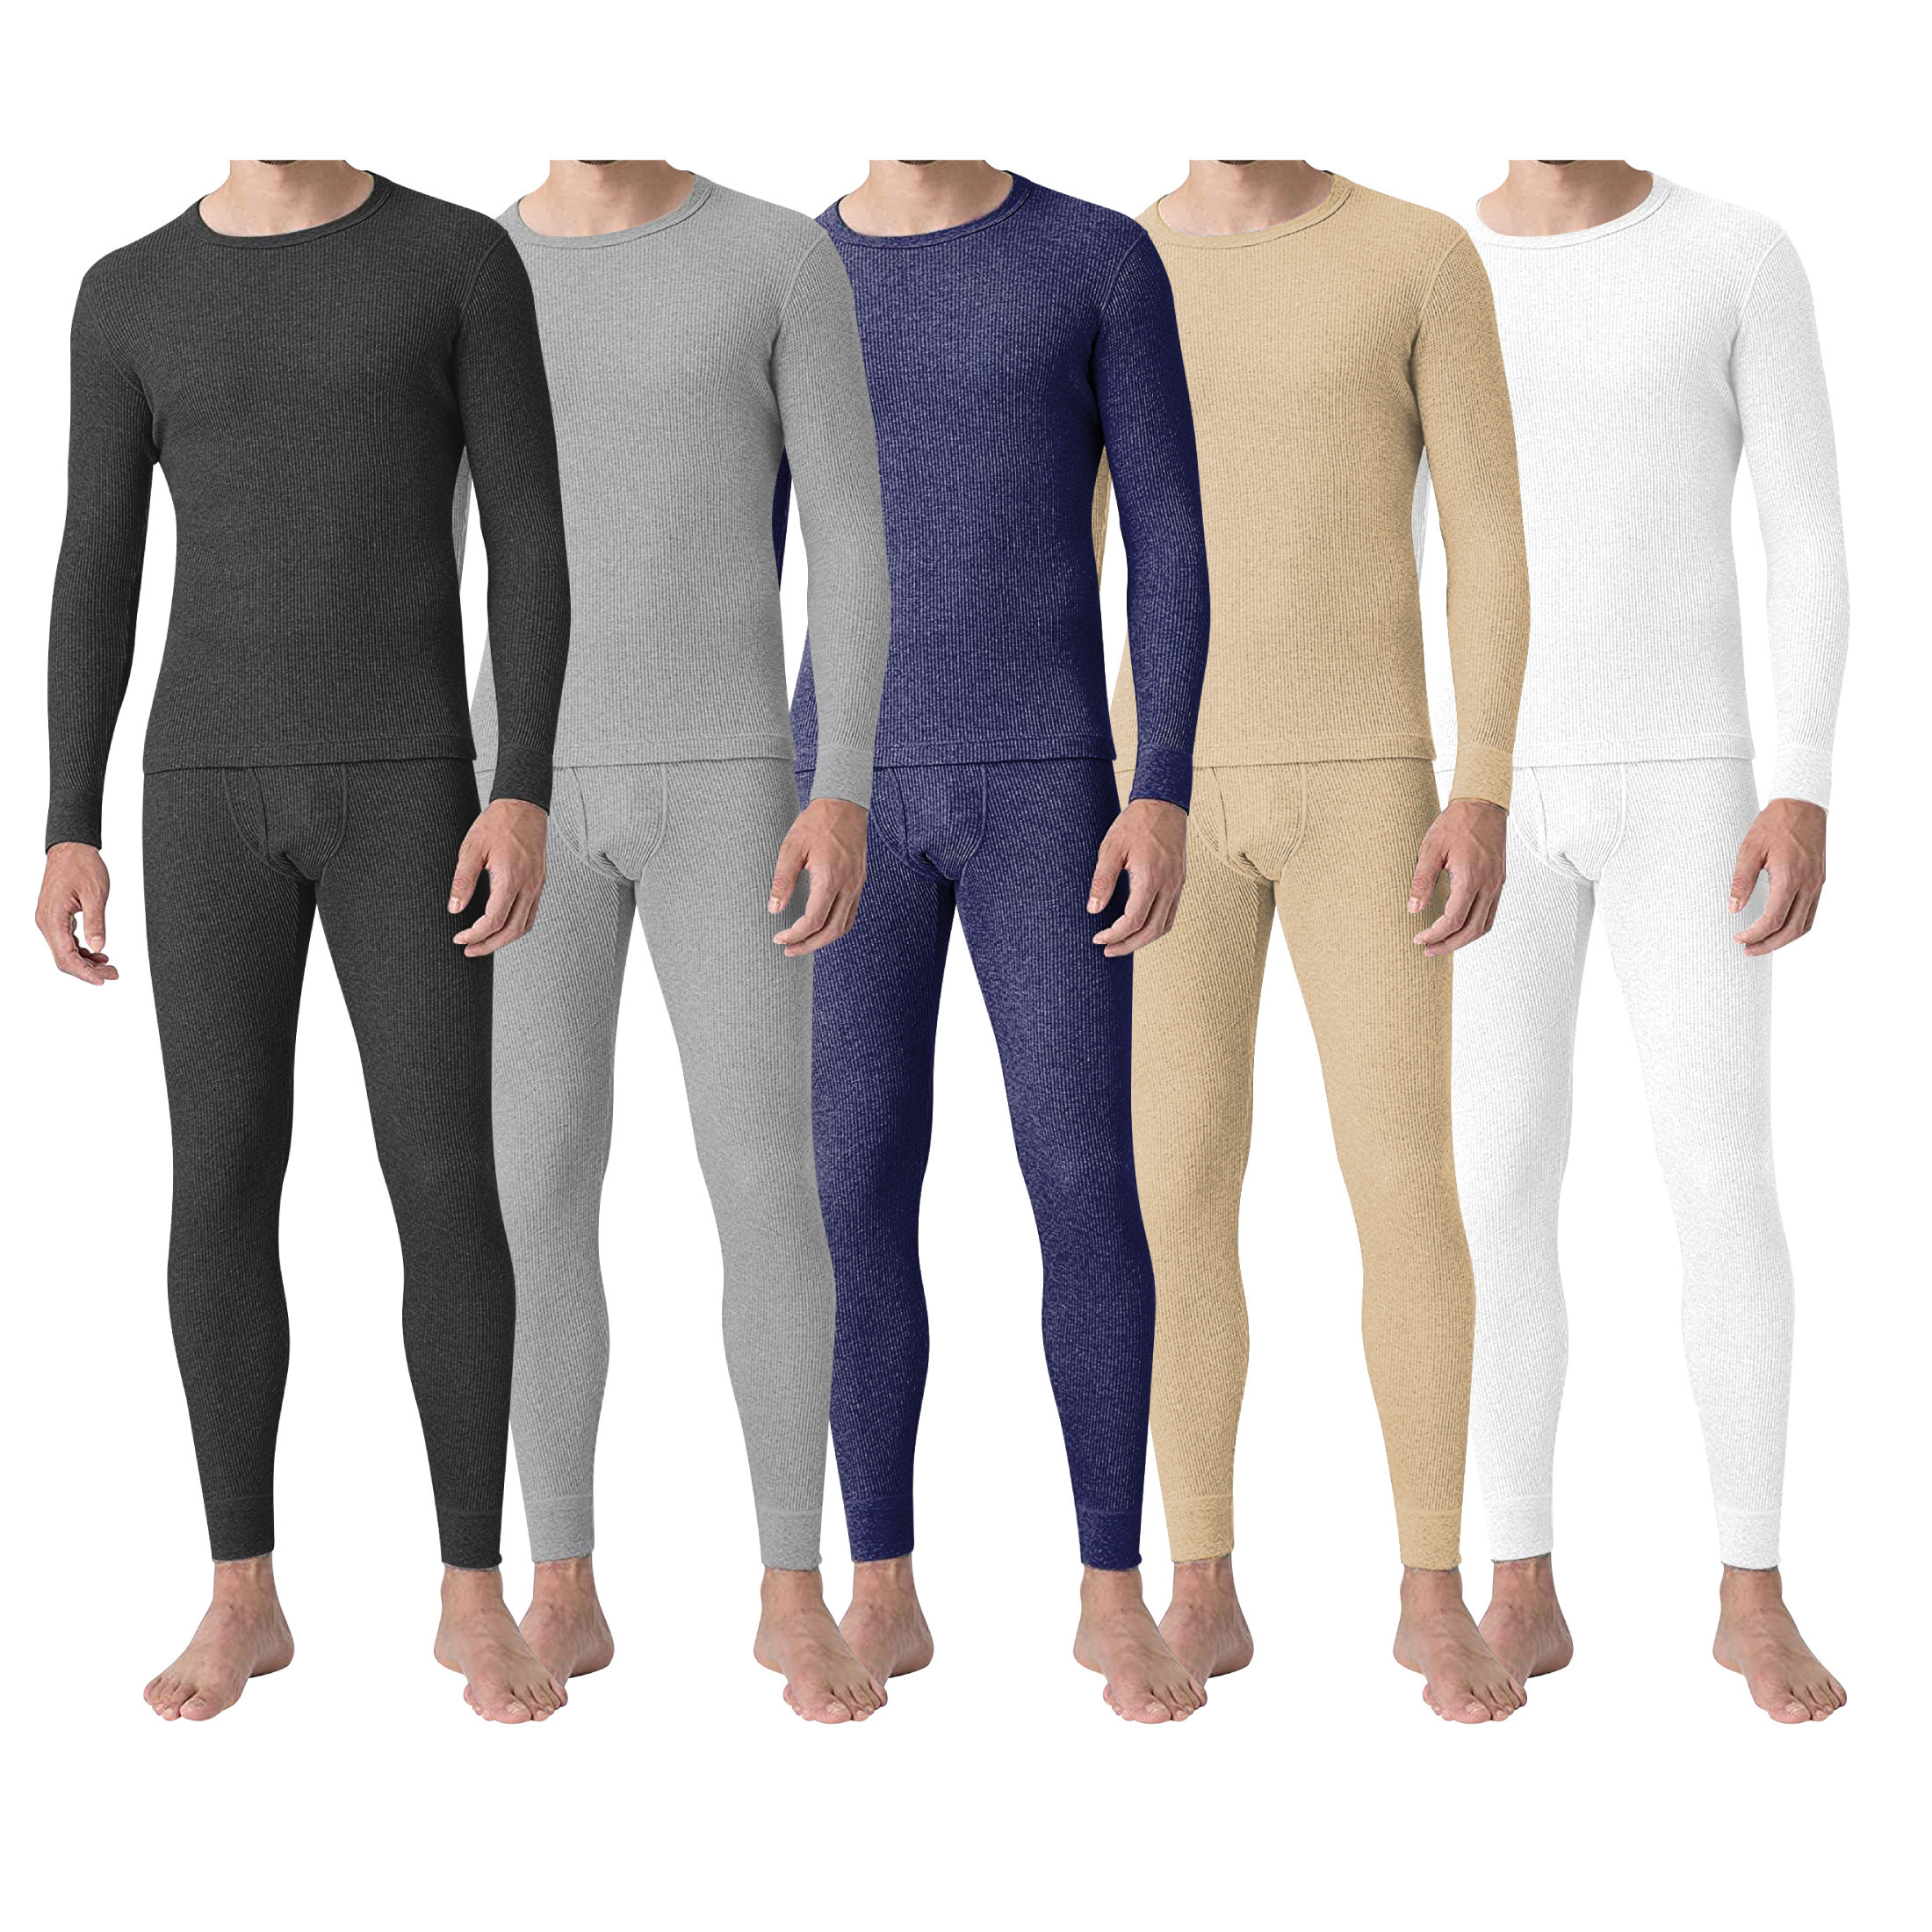 2-Piece: Men's Super Soft Cotton Waffle Knit Winter Thermal Underwear Set - Tan, Large